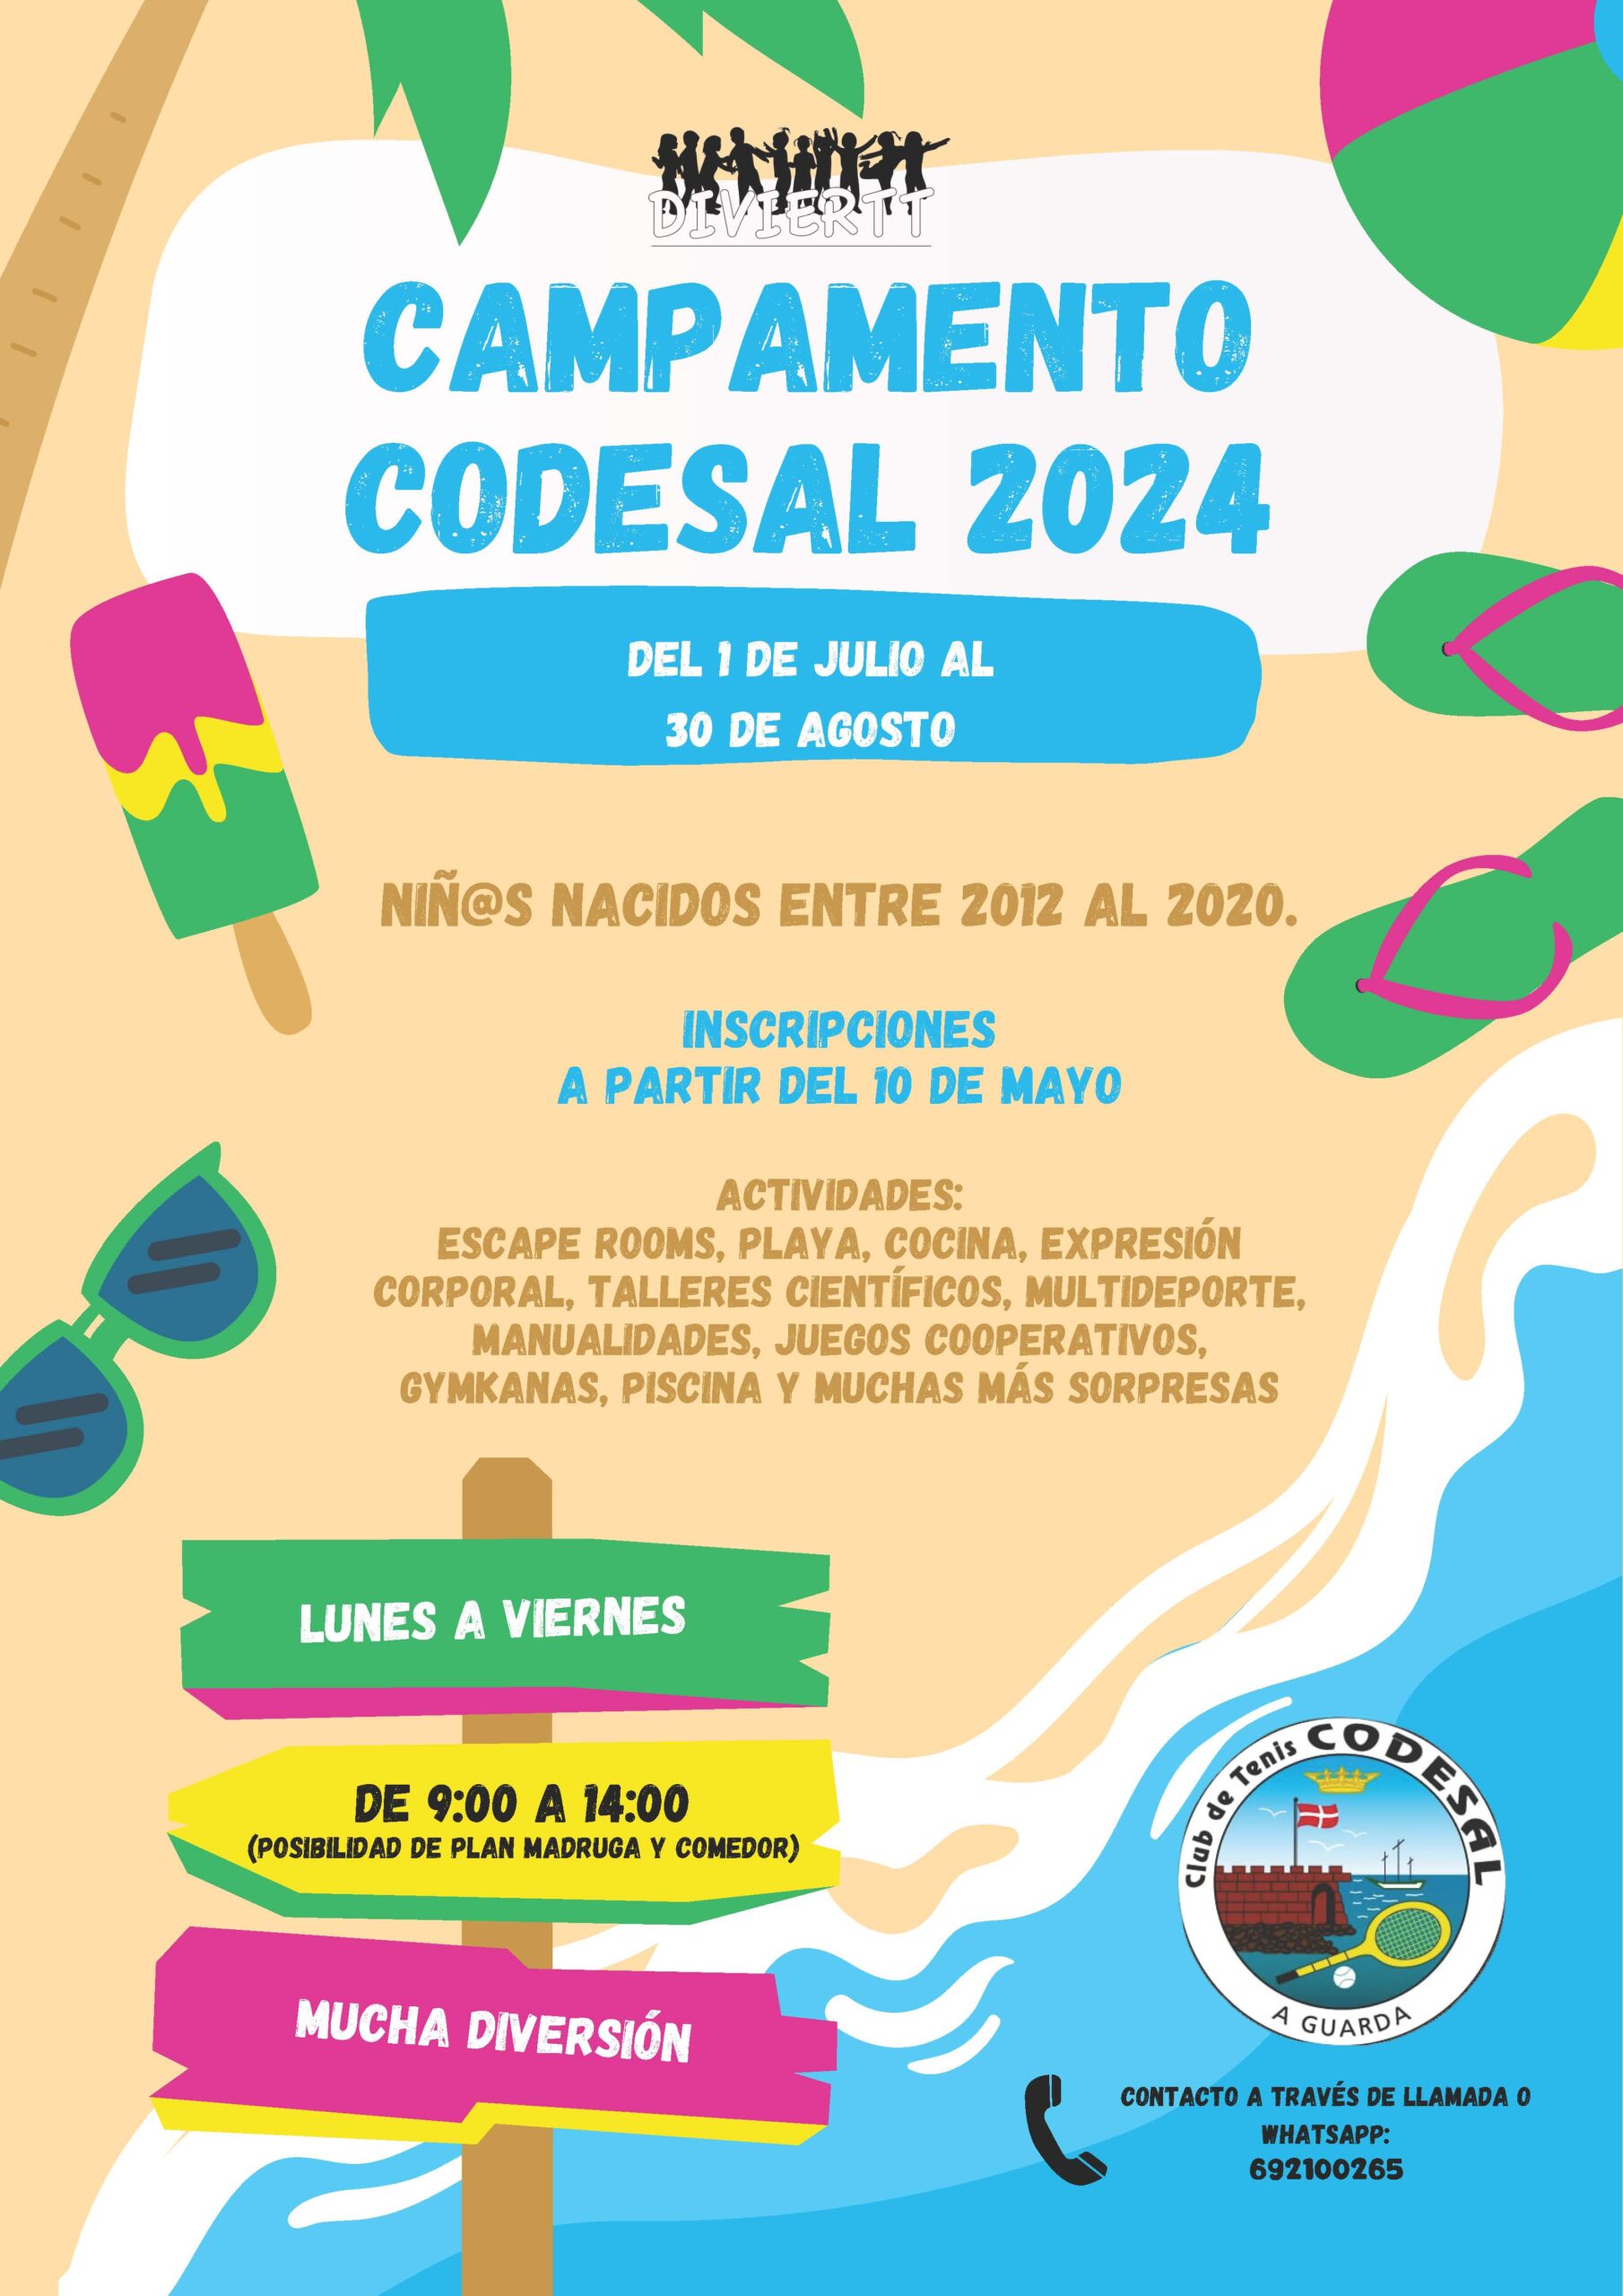 Campamento Codesal 2024